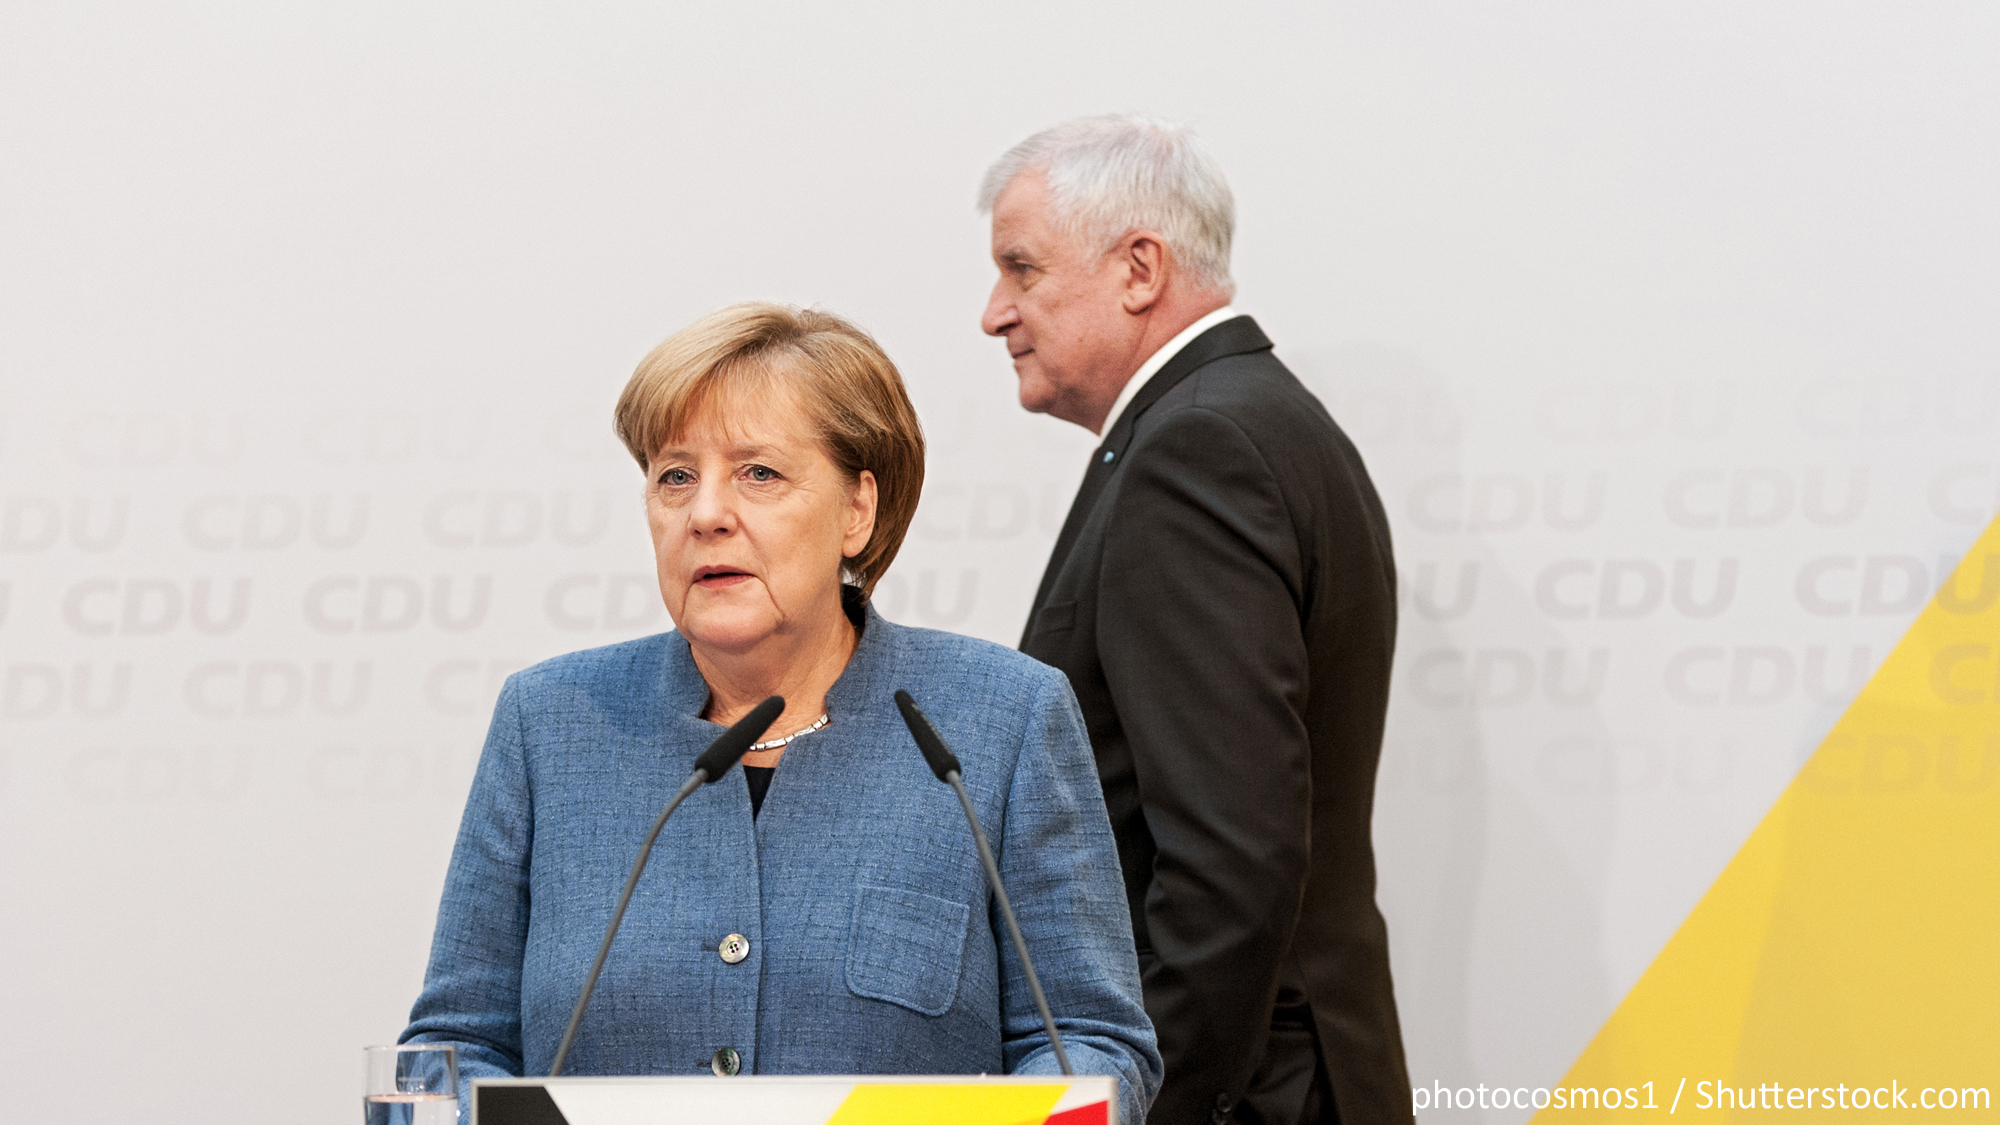 Angela Merkel und Horst Seehofer. Bild: photocosmos1 / Shutterstock.com